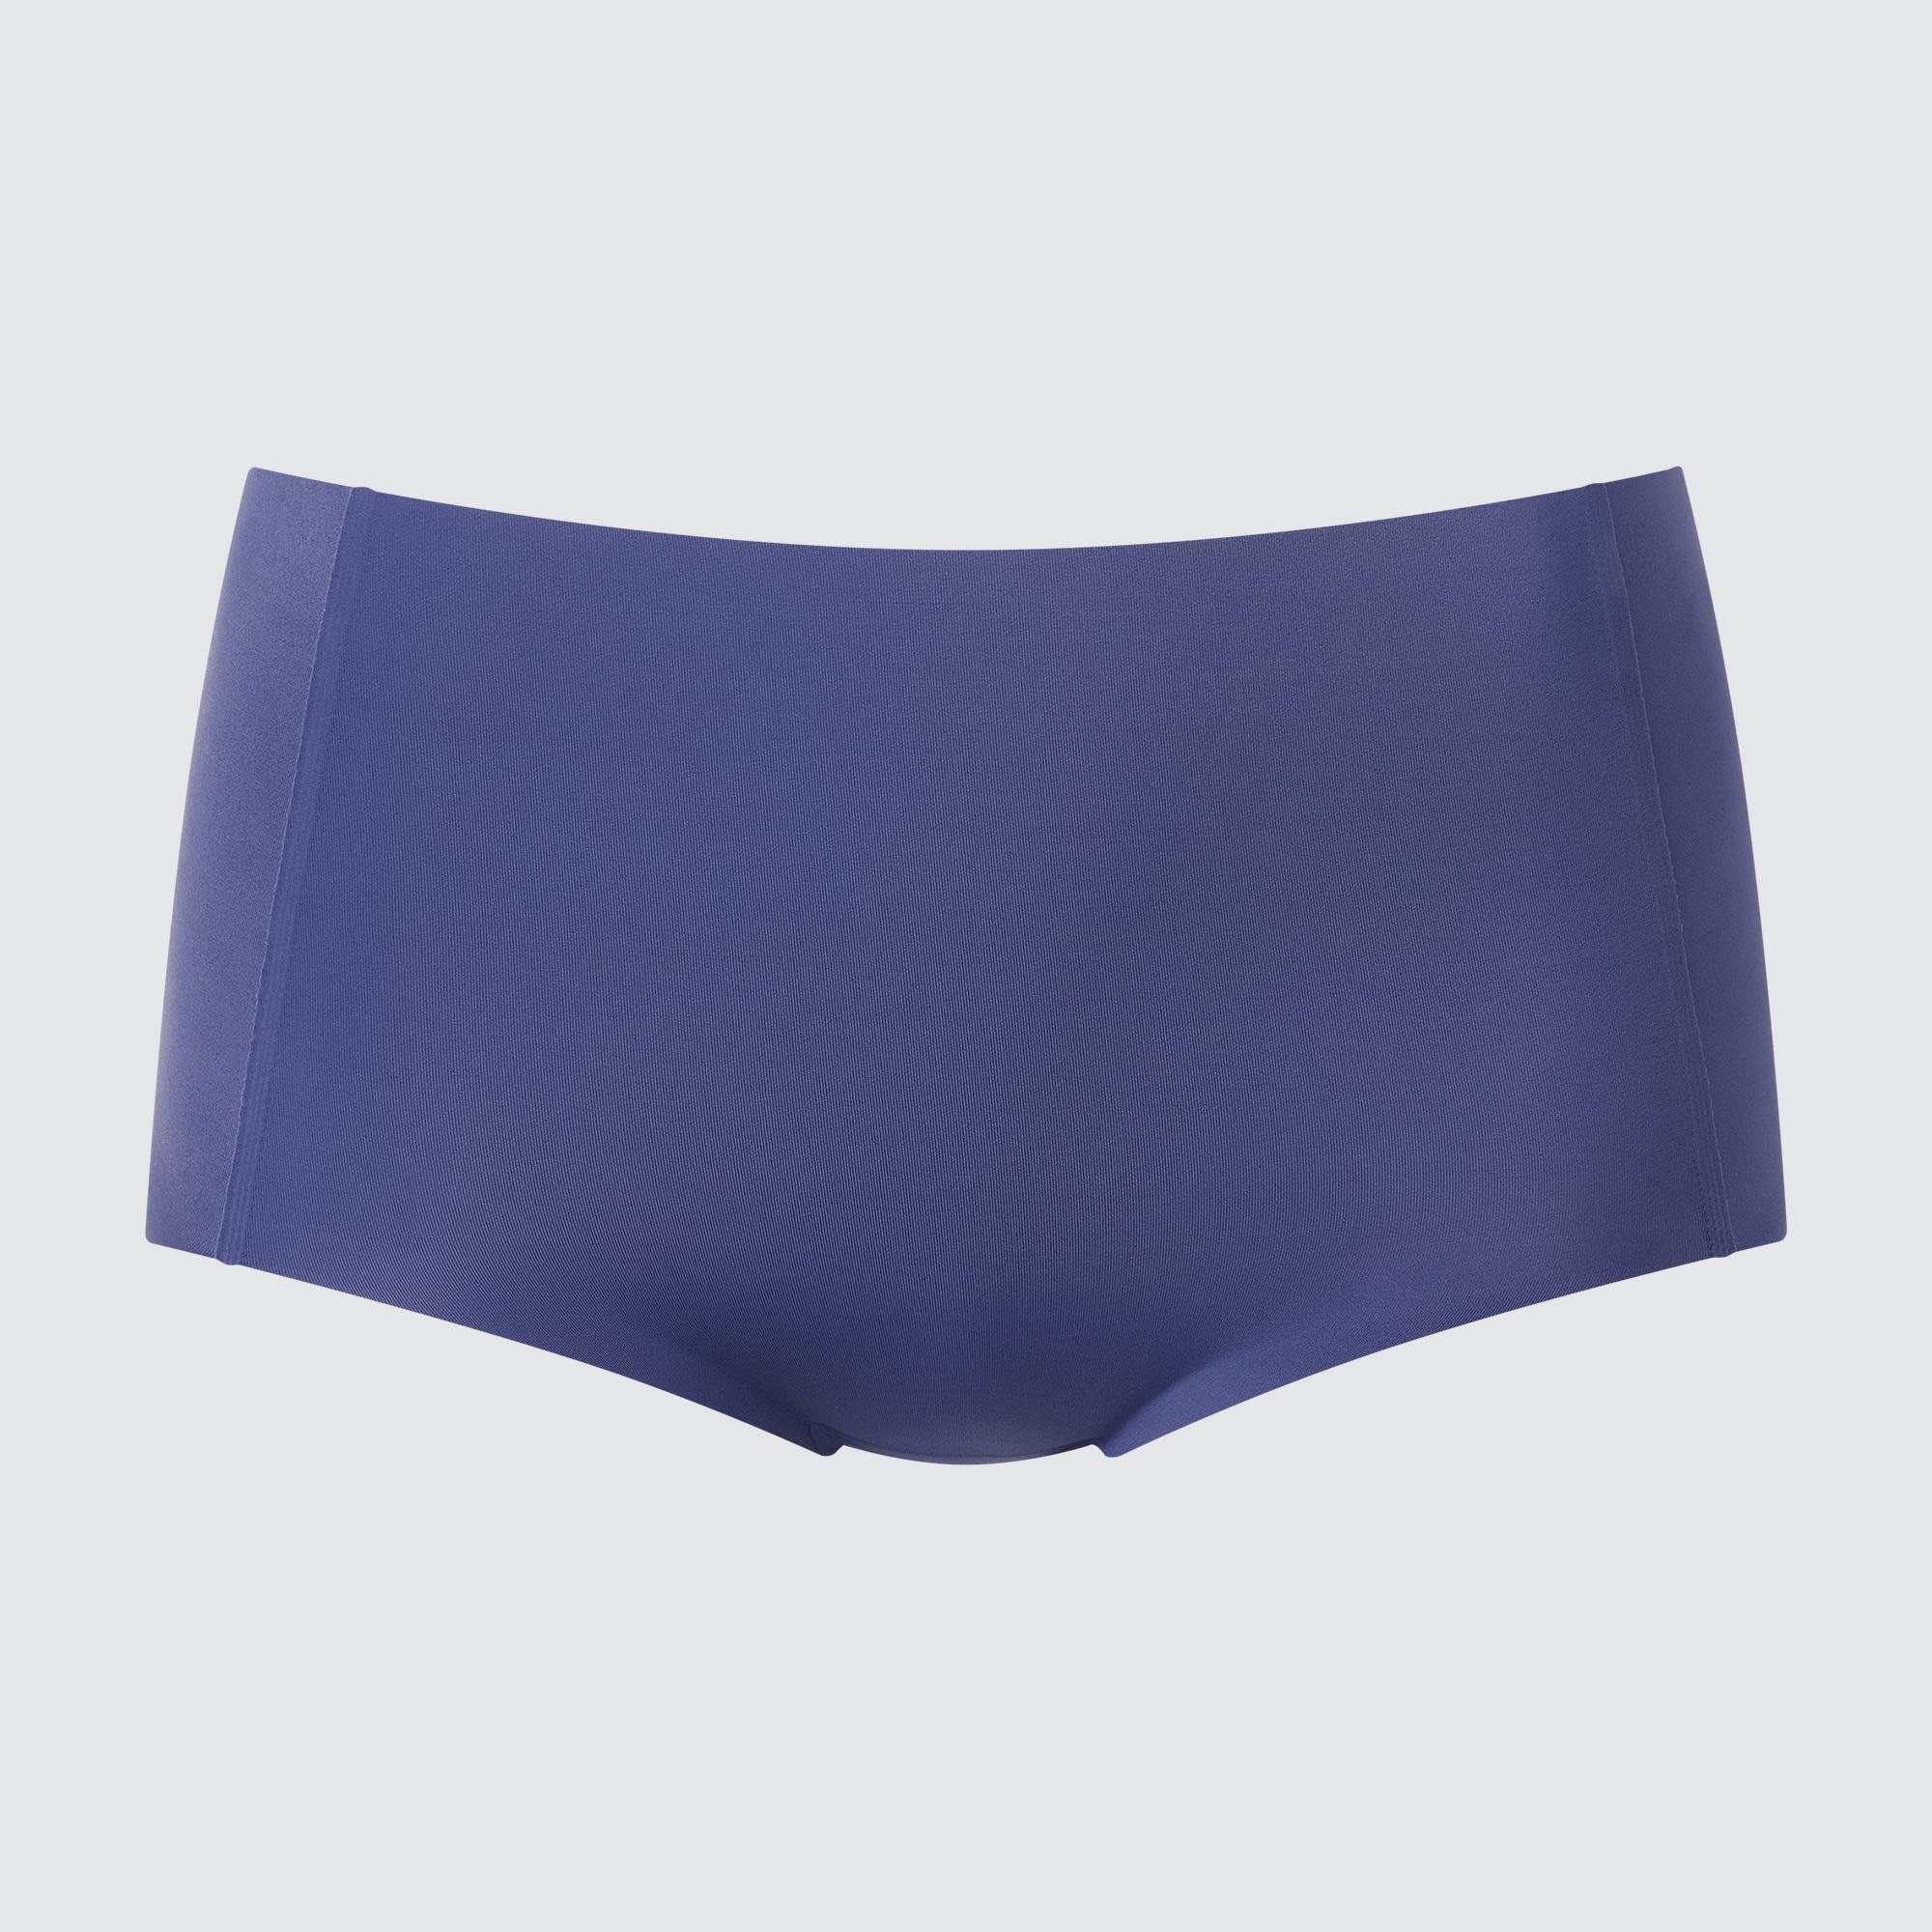 Uniqlo Ultra Seamless Panty - M (1/2), Women's Fashion, New Undergarments &  Loungewear on Carousell